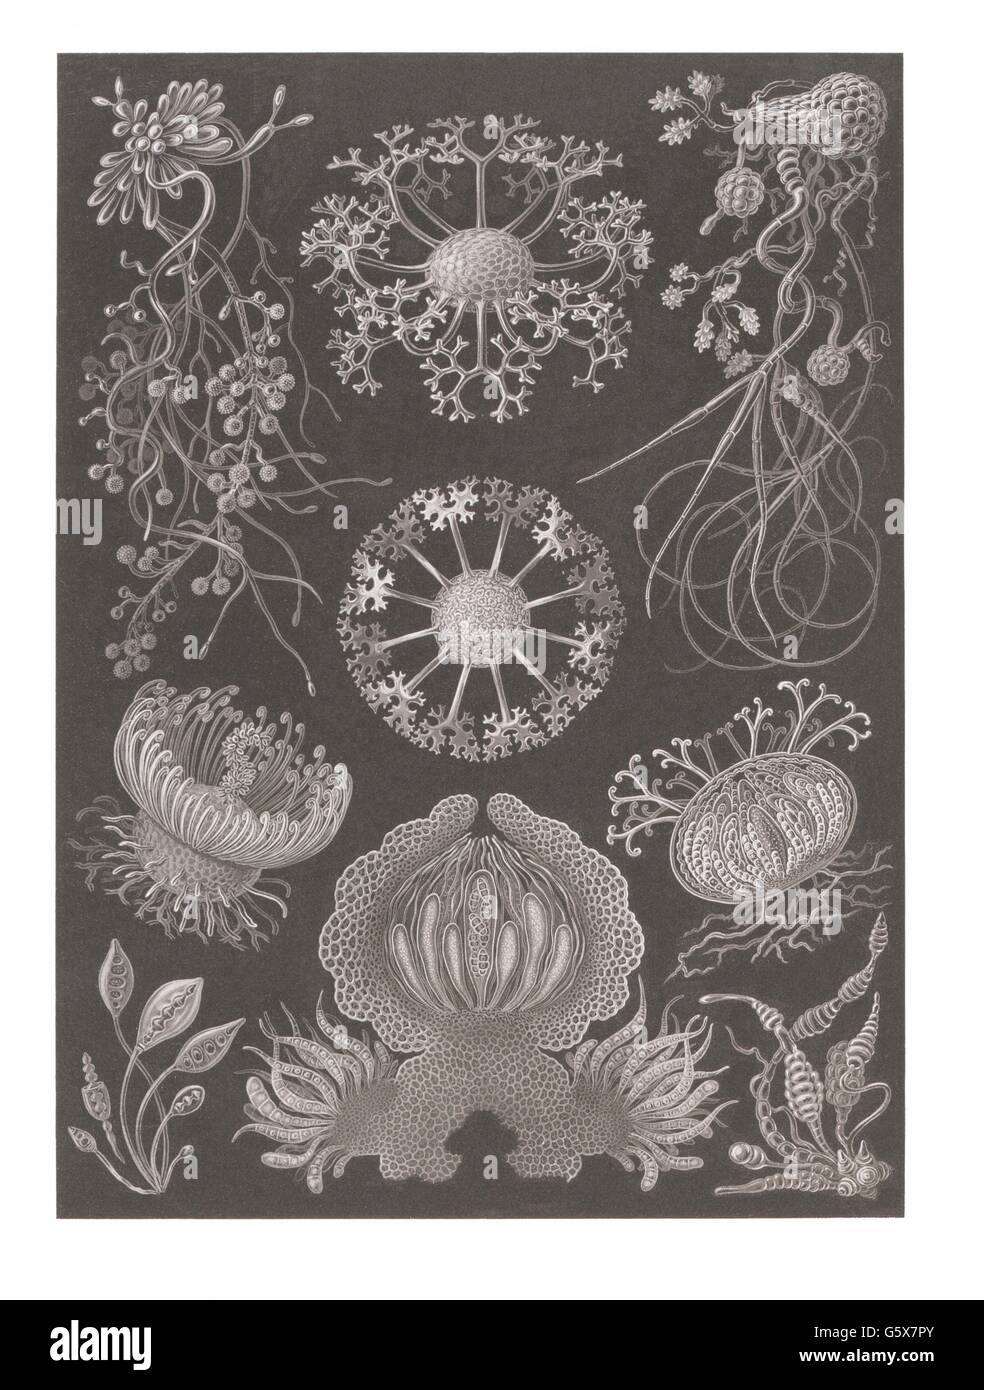 botanik, Pilz, Beutelpilze (Ascomycota), Farblithographie, aus: Ernst Haeckel, 'Kunstformen der Natur', Leipzig - Wien, 1899 - 1904, Additional-Rights-Clearences-not available Stockfoto